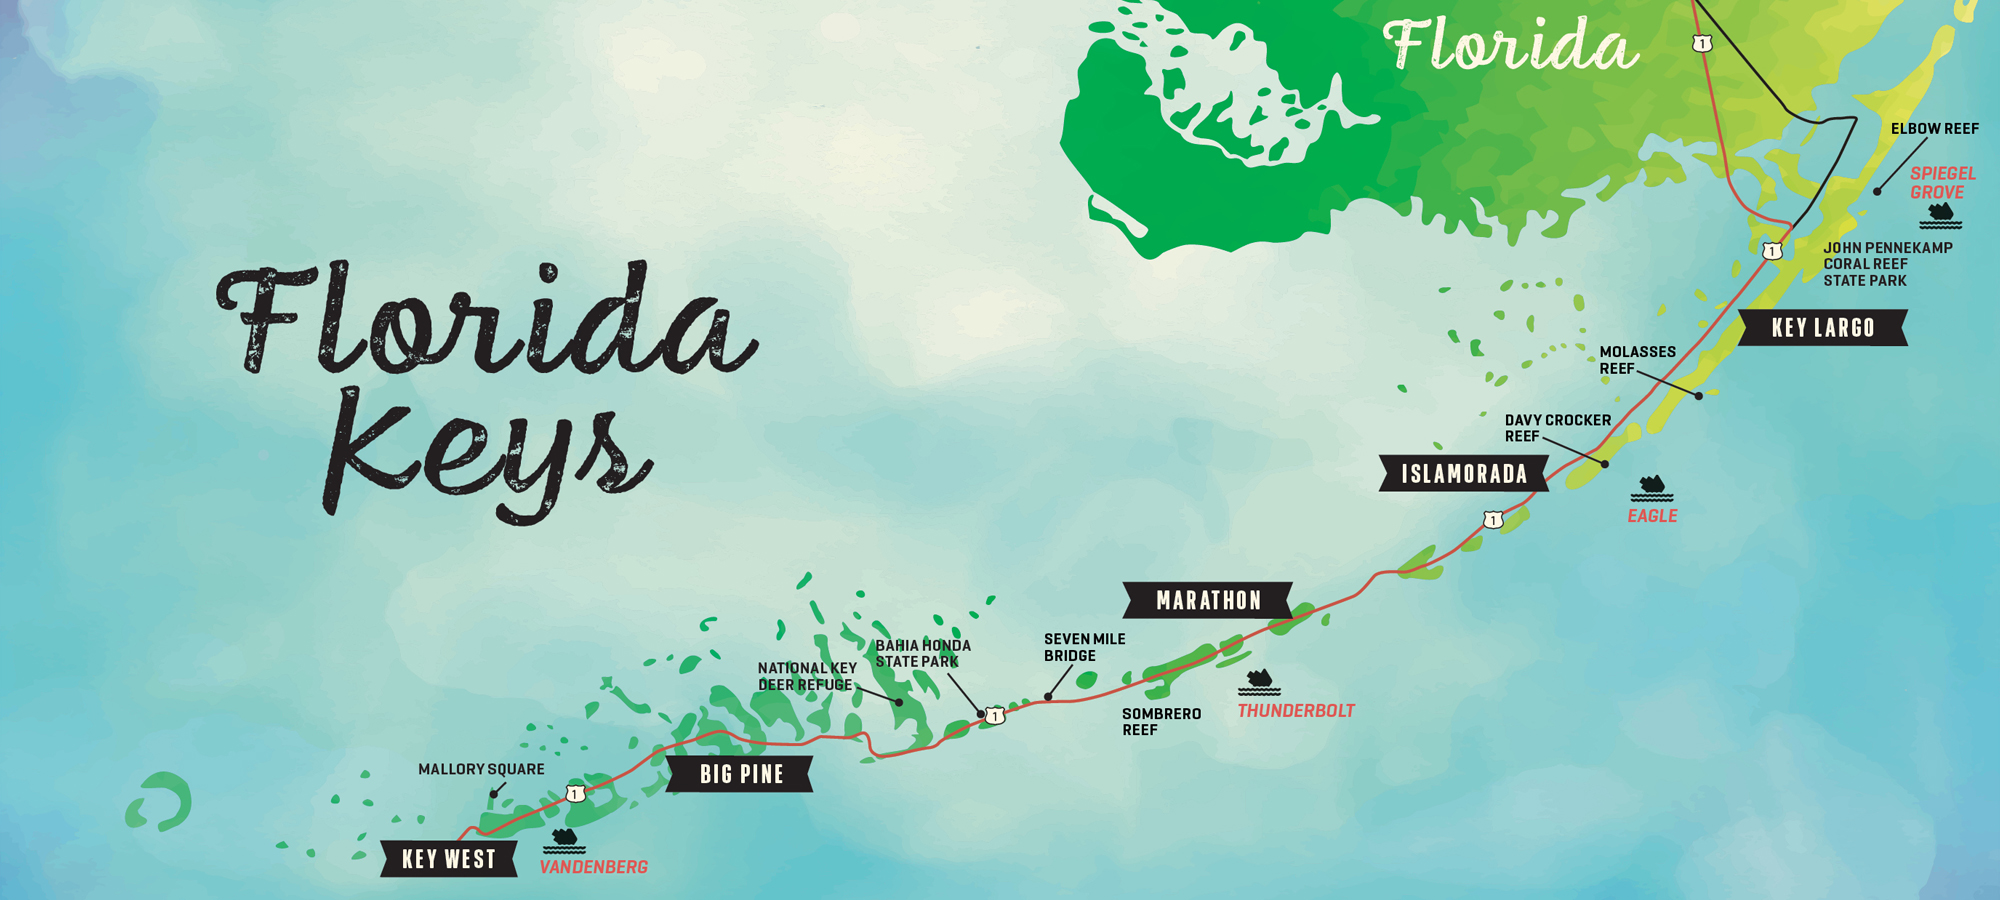 Map of the Florida Keys